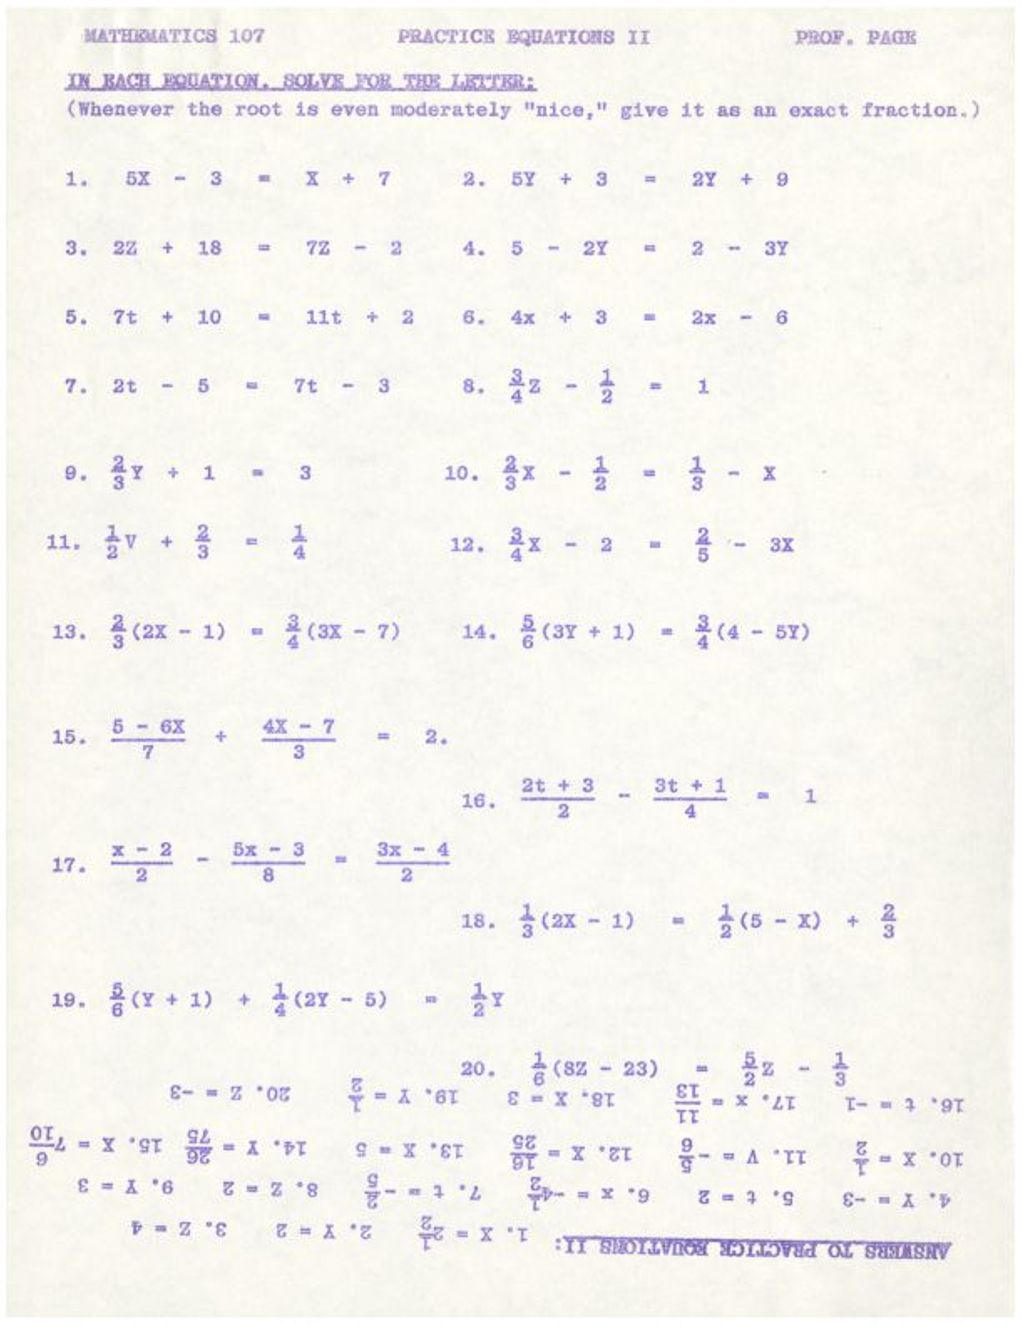 Miniature of Math 107 Practice Equations II